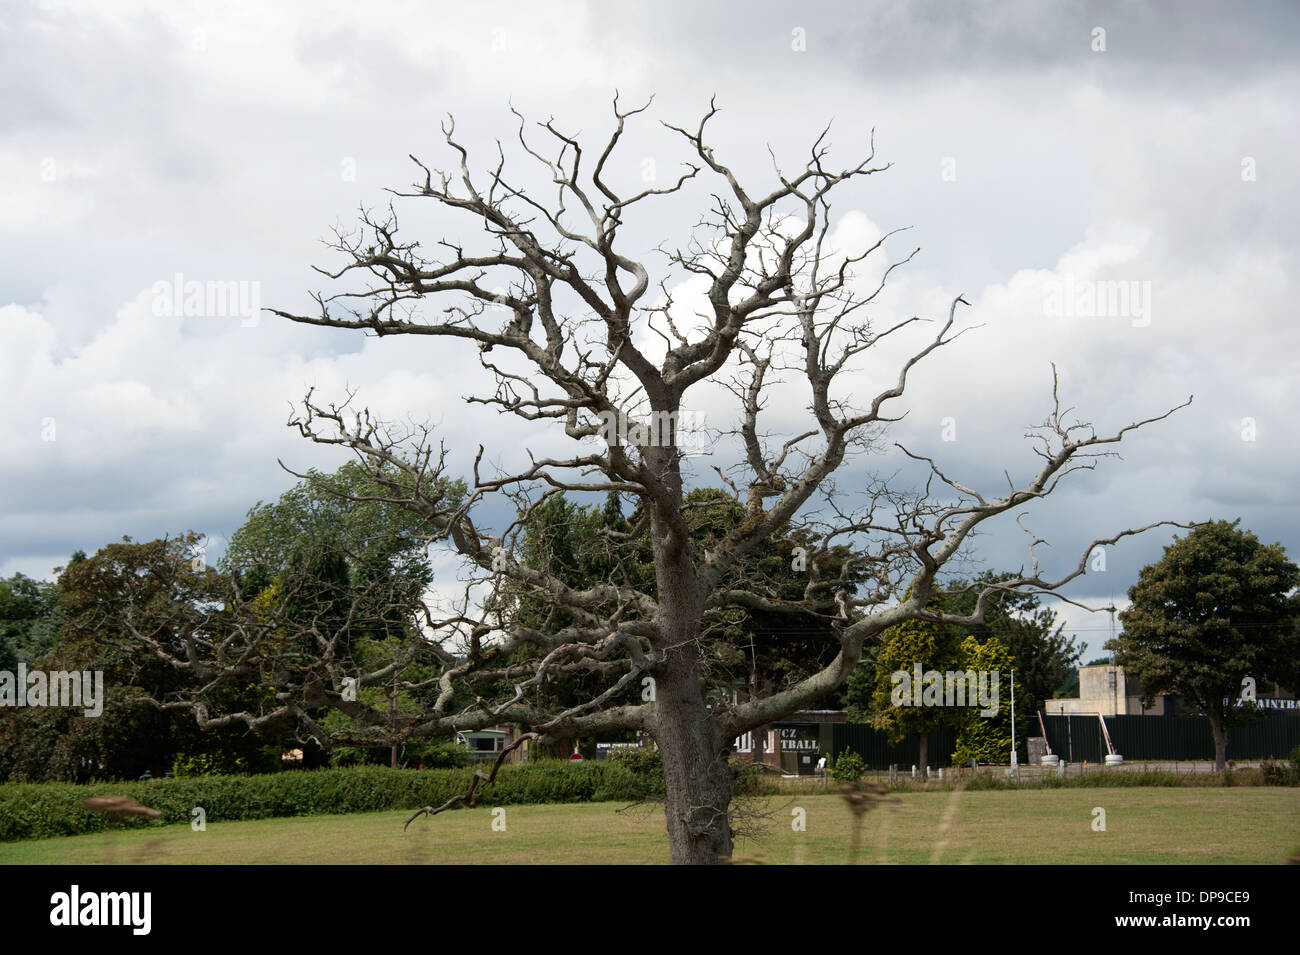 Stark Dead Tree Struck Killed by Lightening Stock Photo